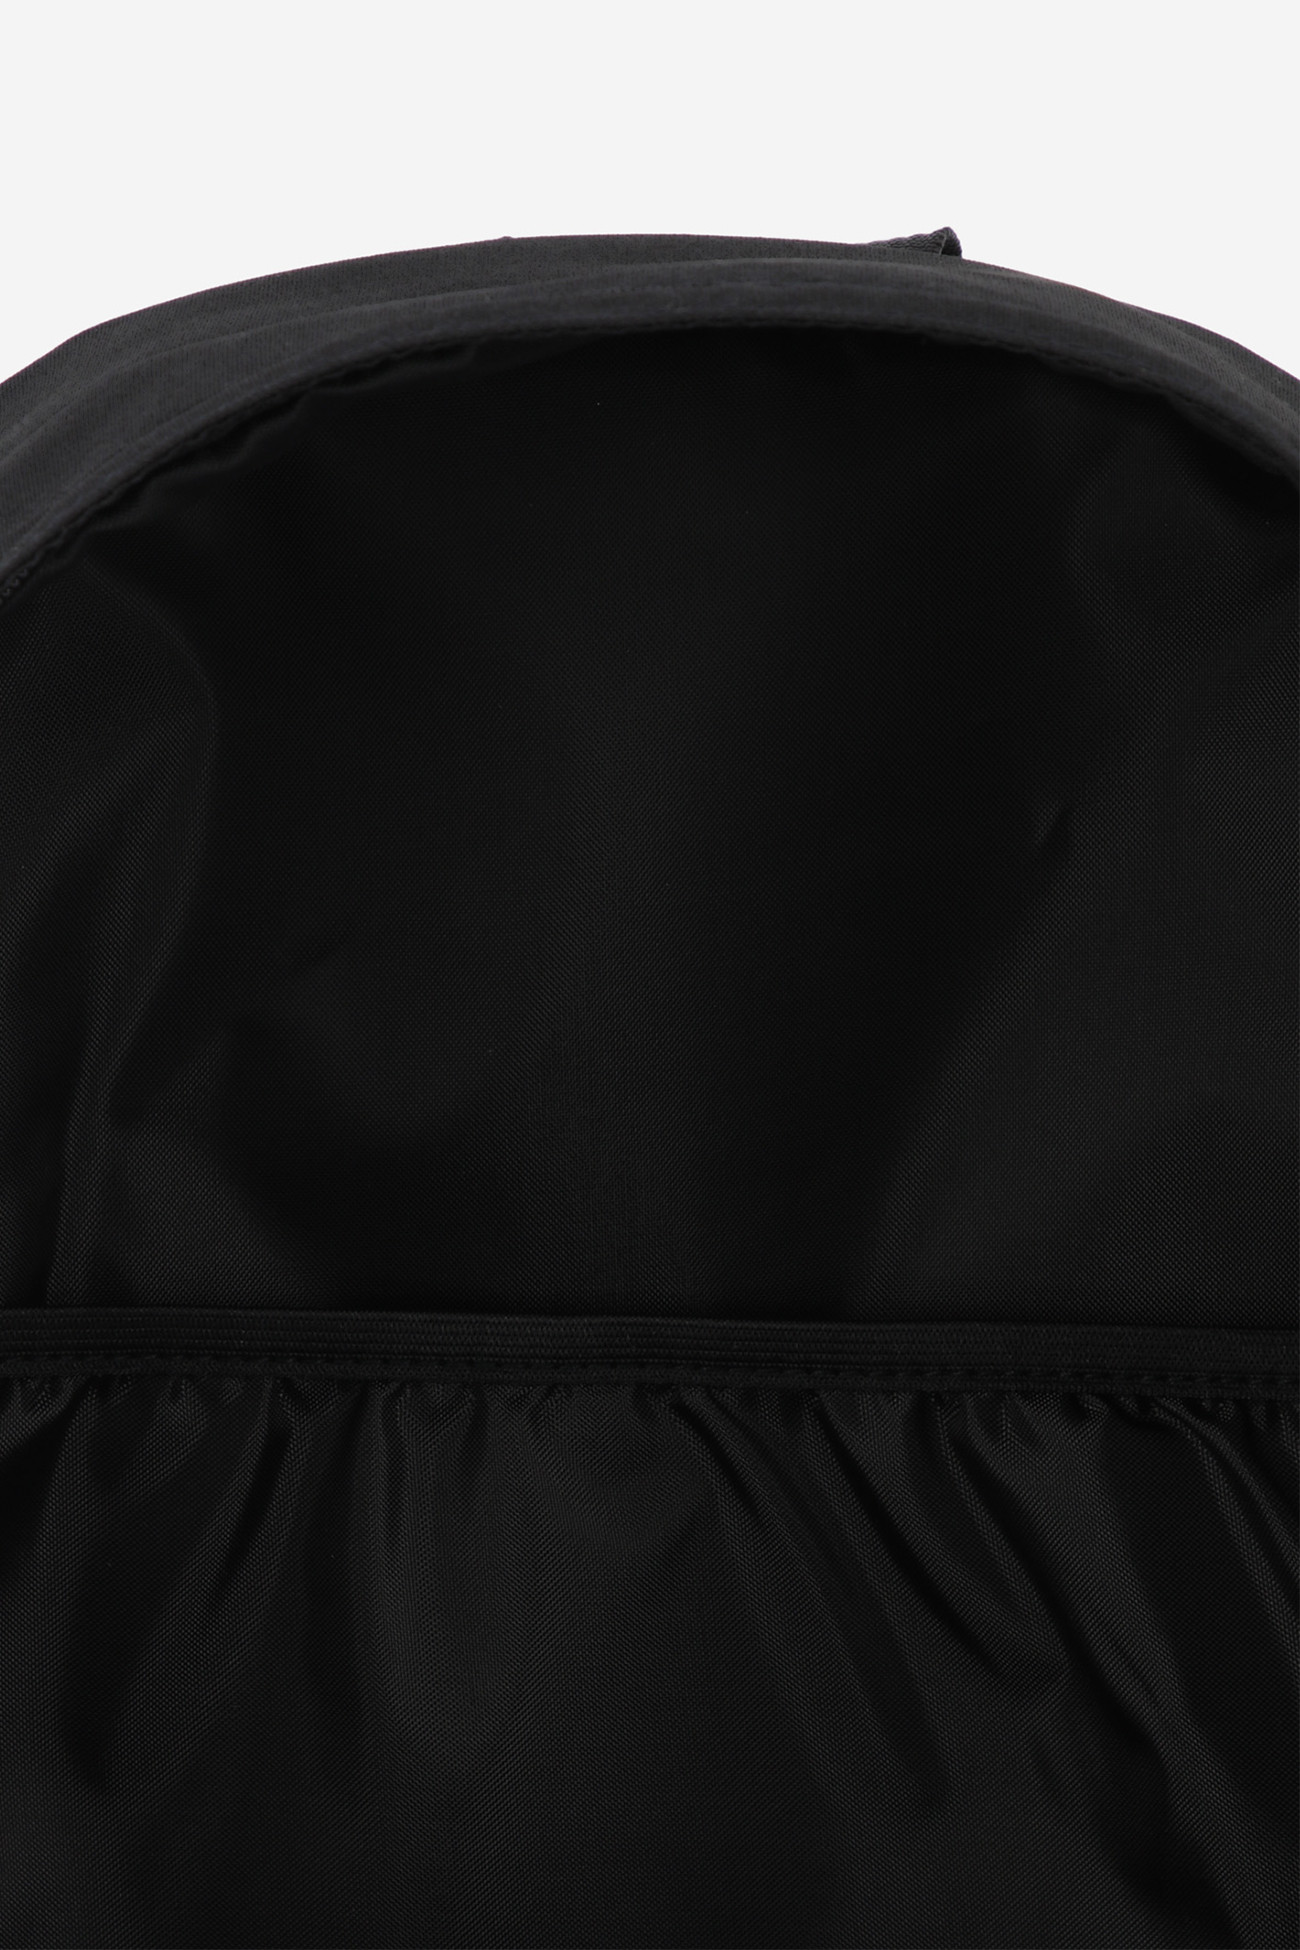 Рюкзак Kappa Backpack черный 113893-99 изображение 7